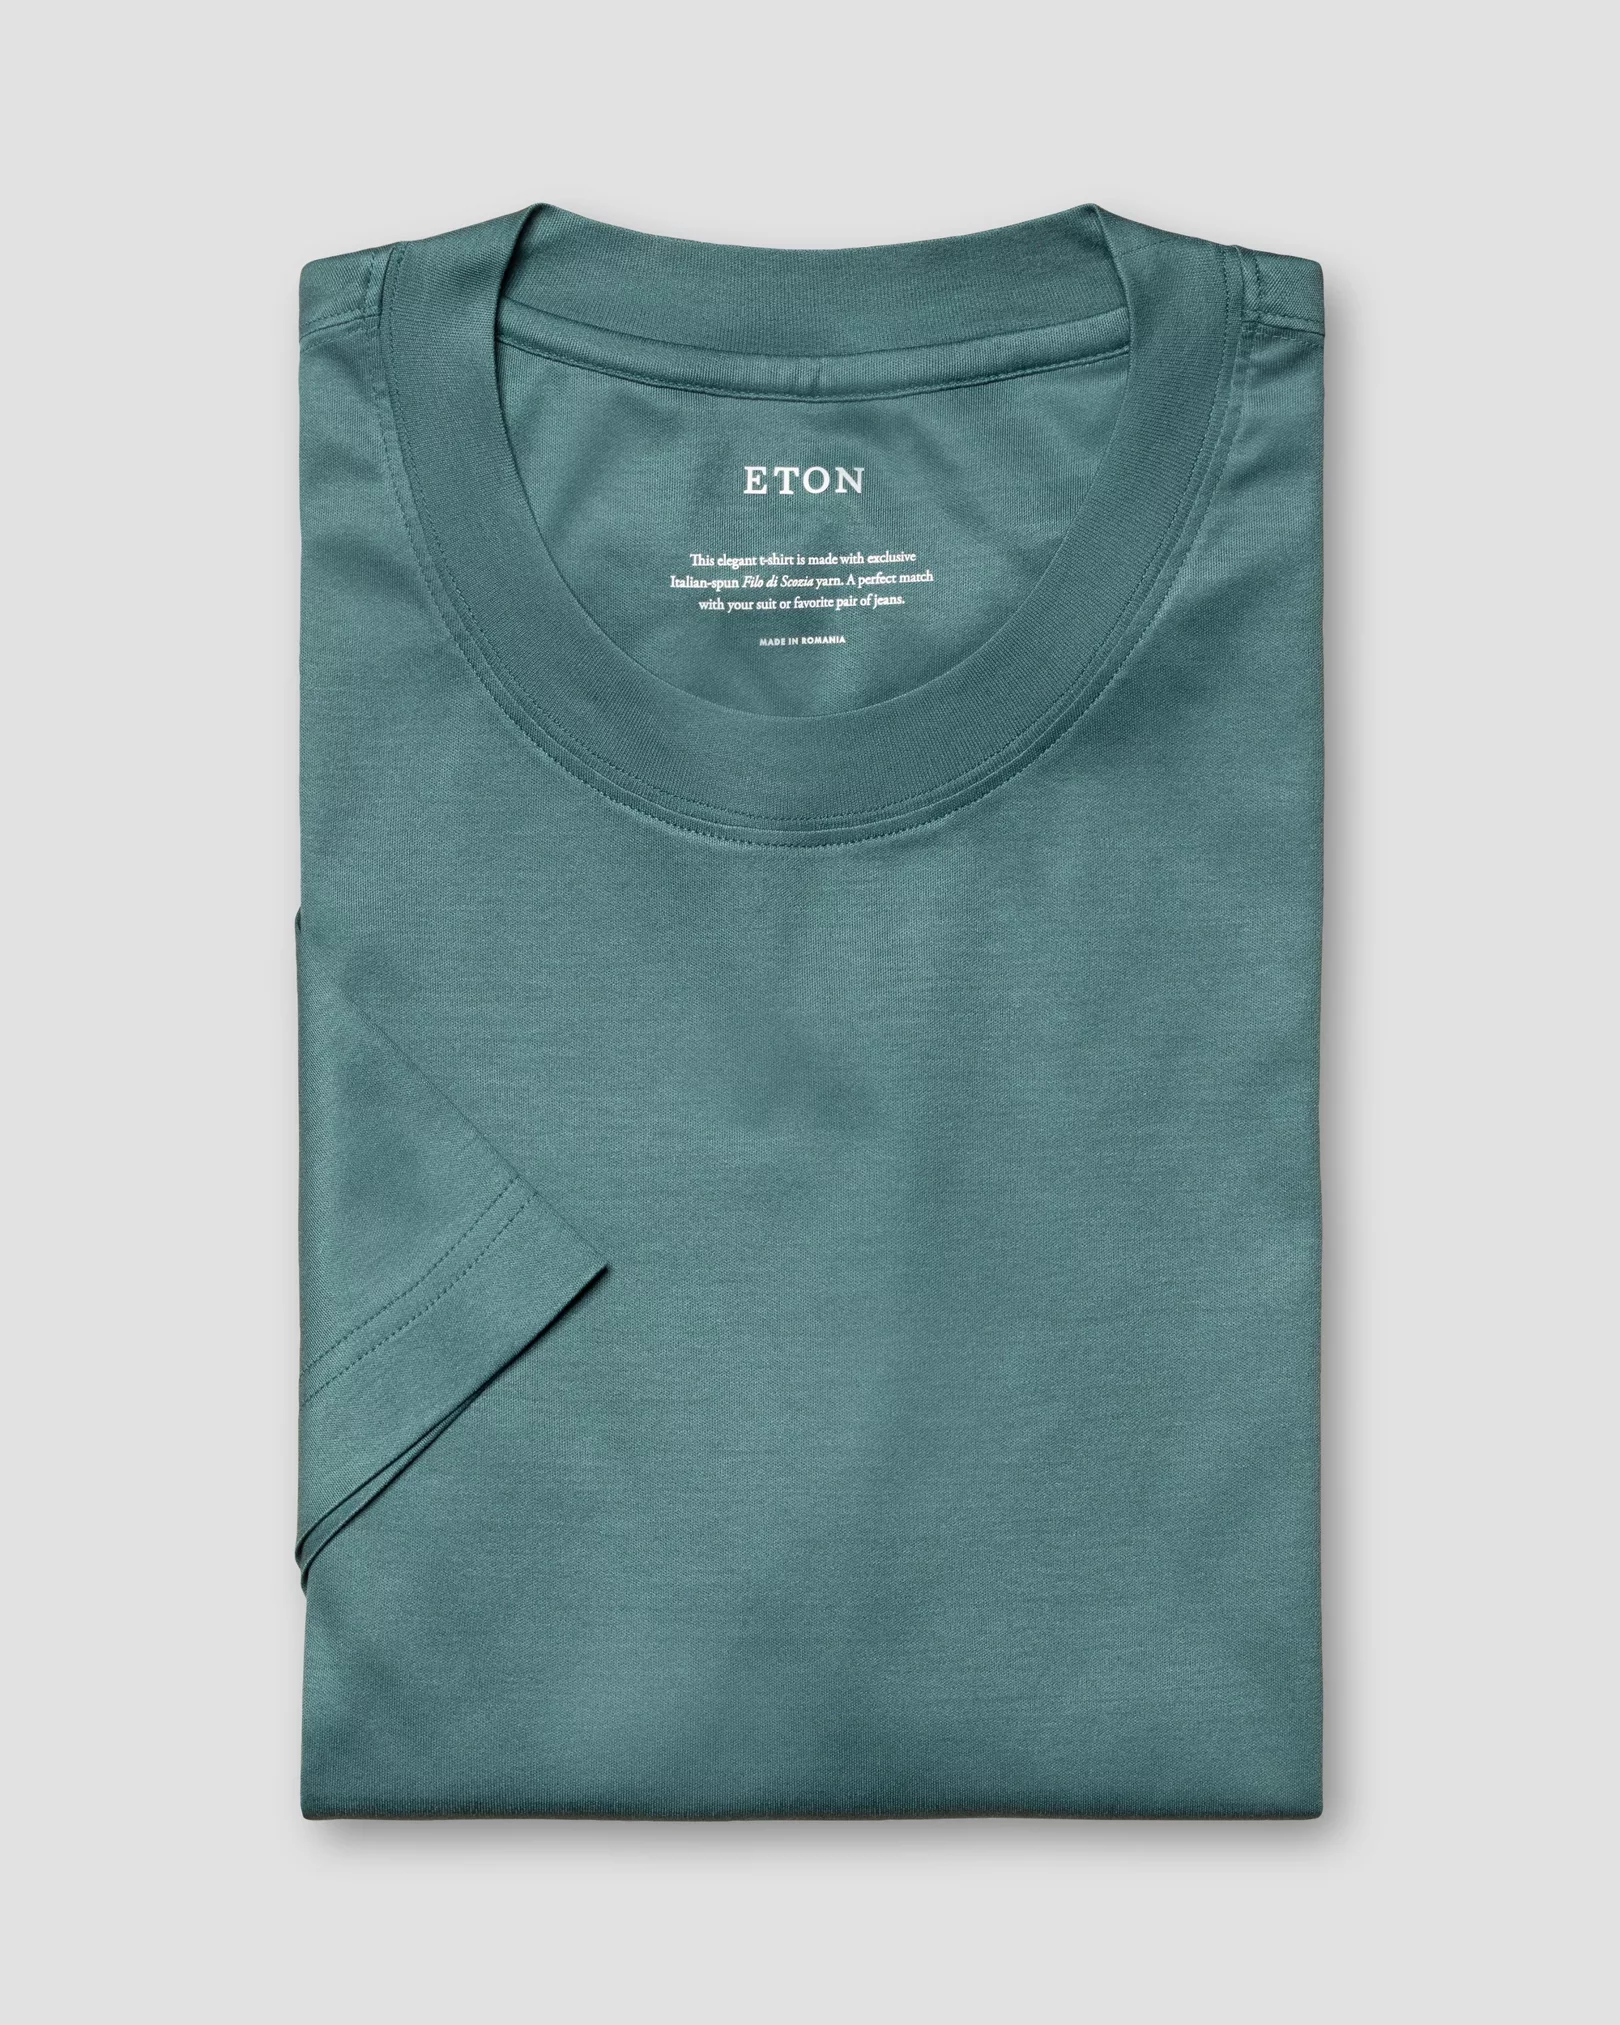 Eton - mid green jersey t shirt